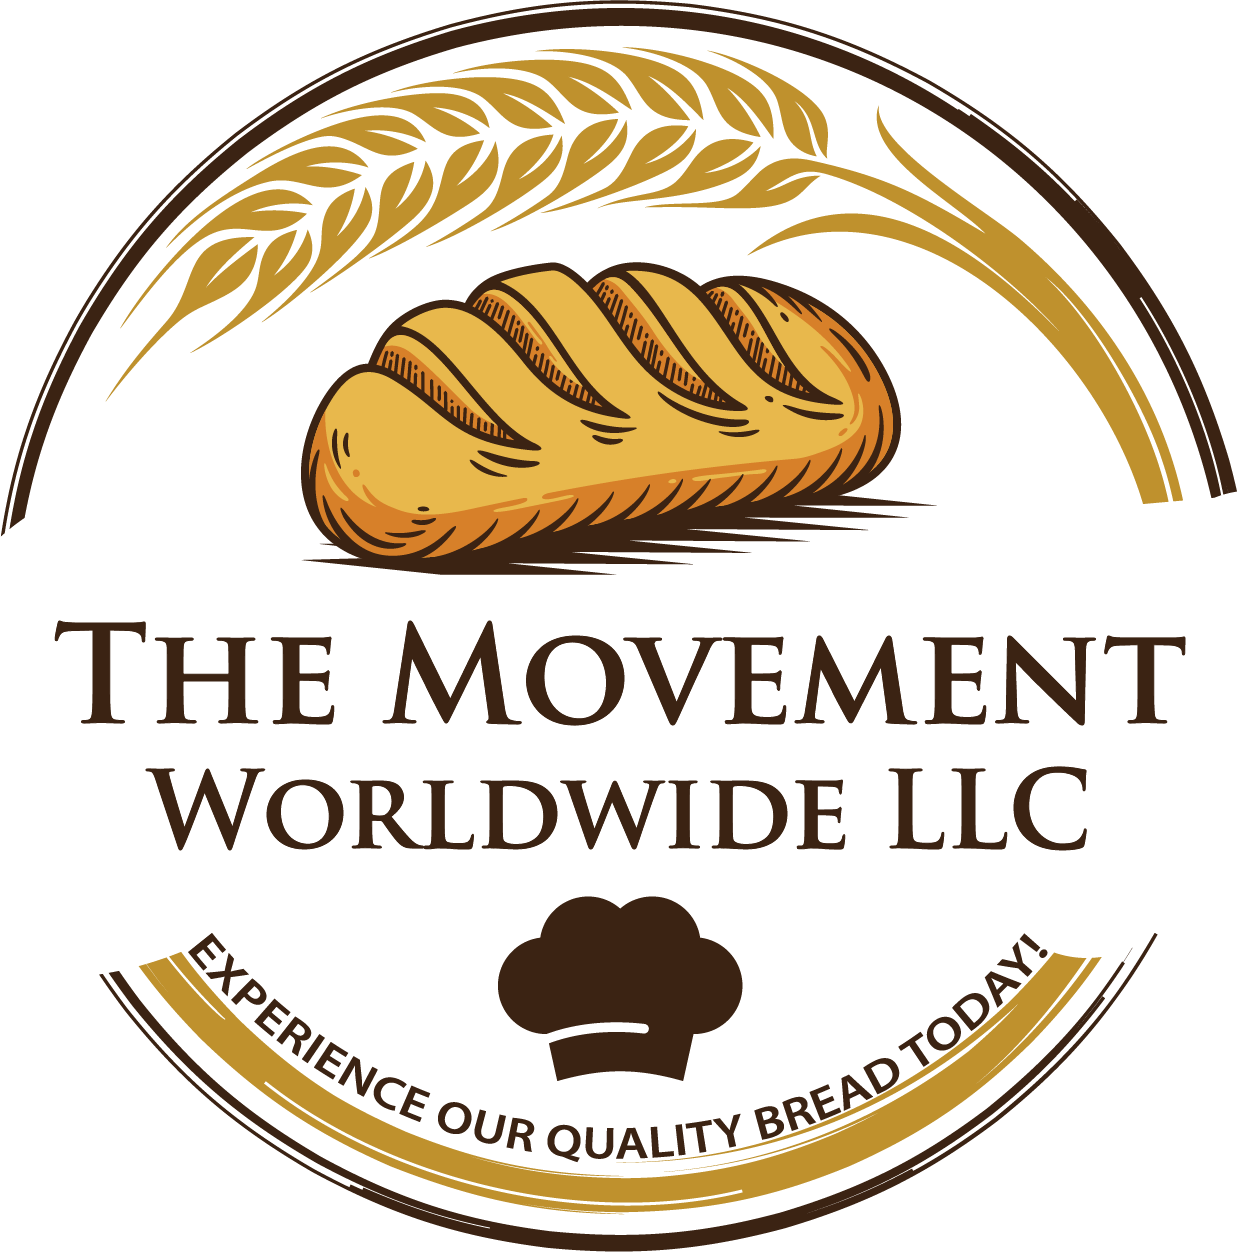 The Movement Worldwide LLC